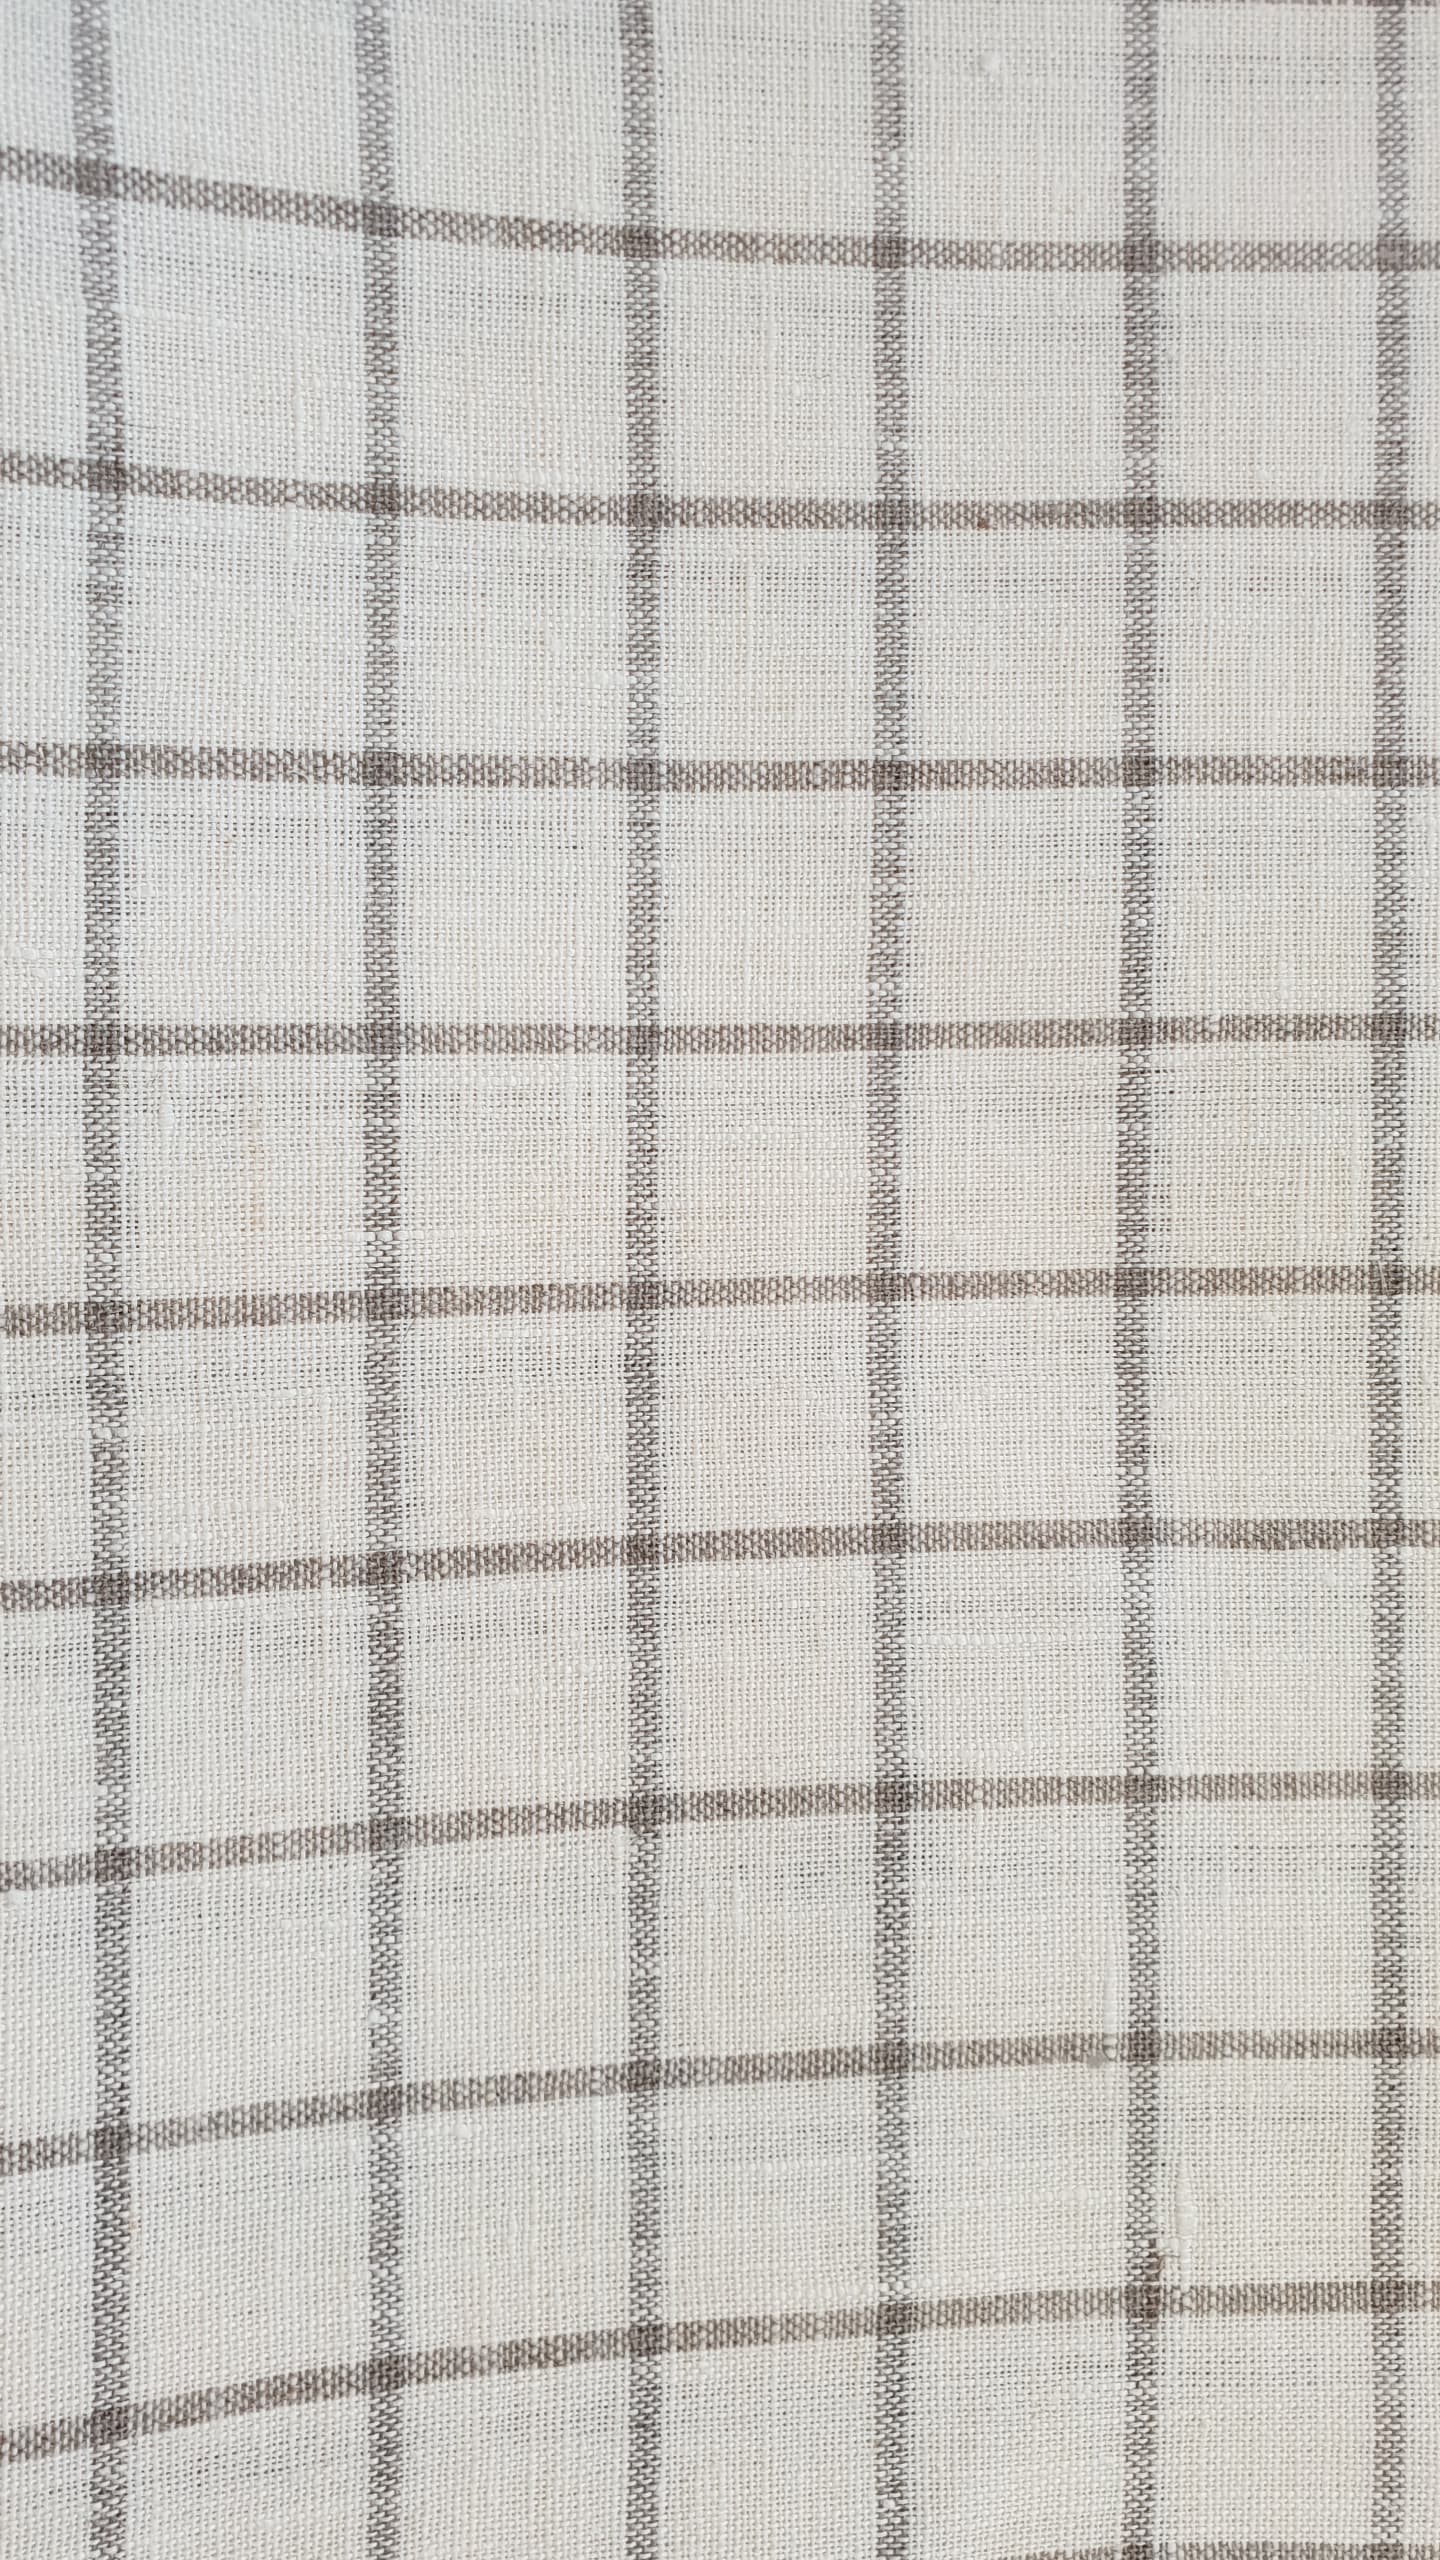 Checked linen-natural, white